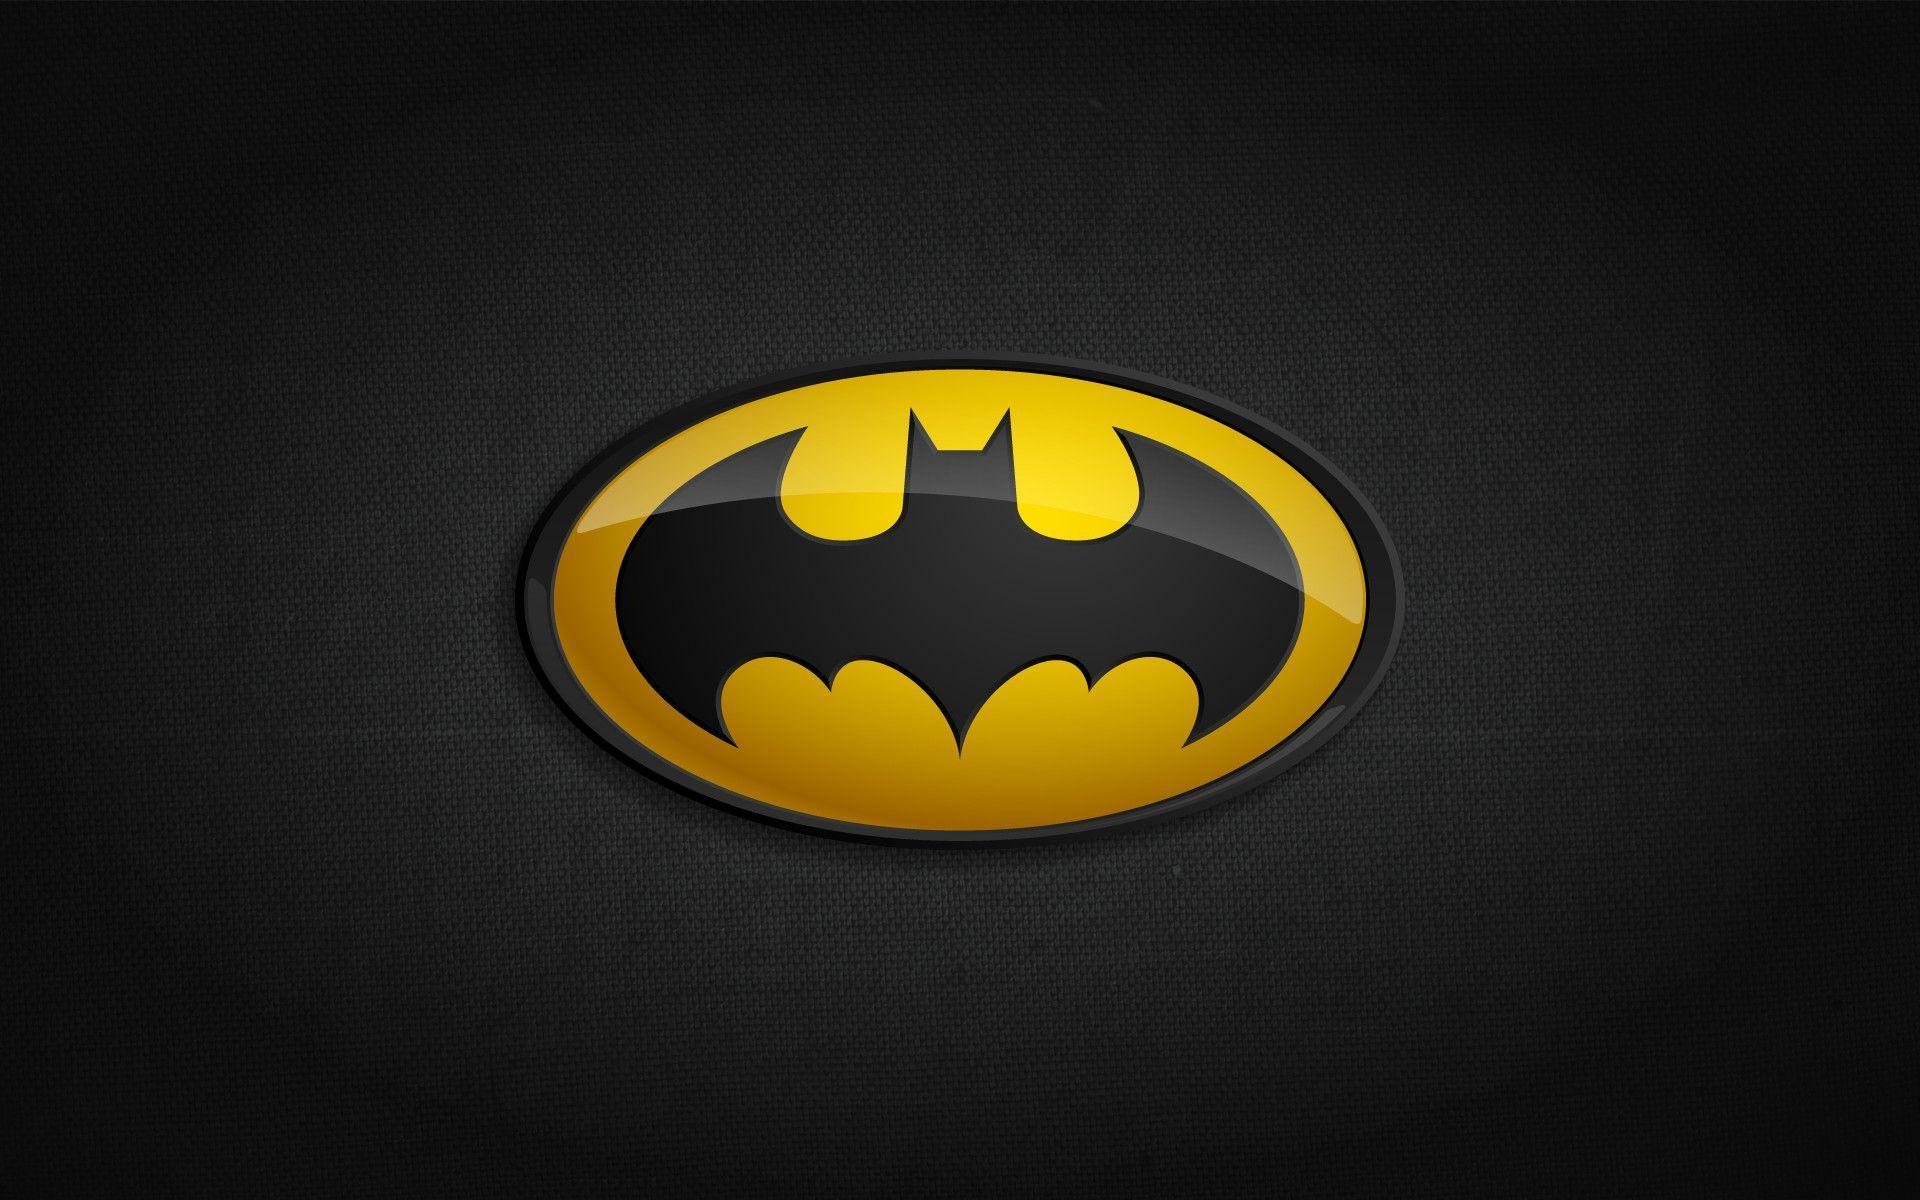 Batman Logo Image Is 4K Wallpaper